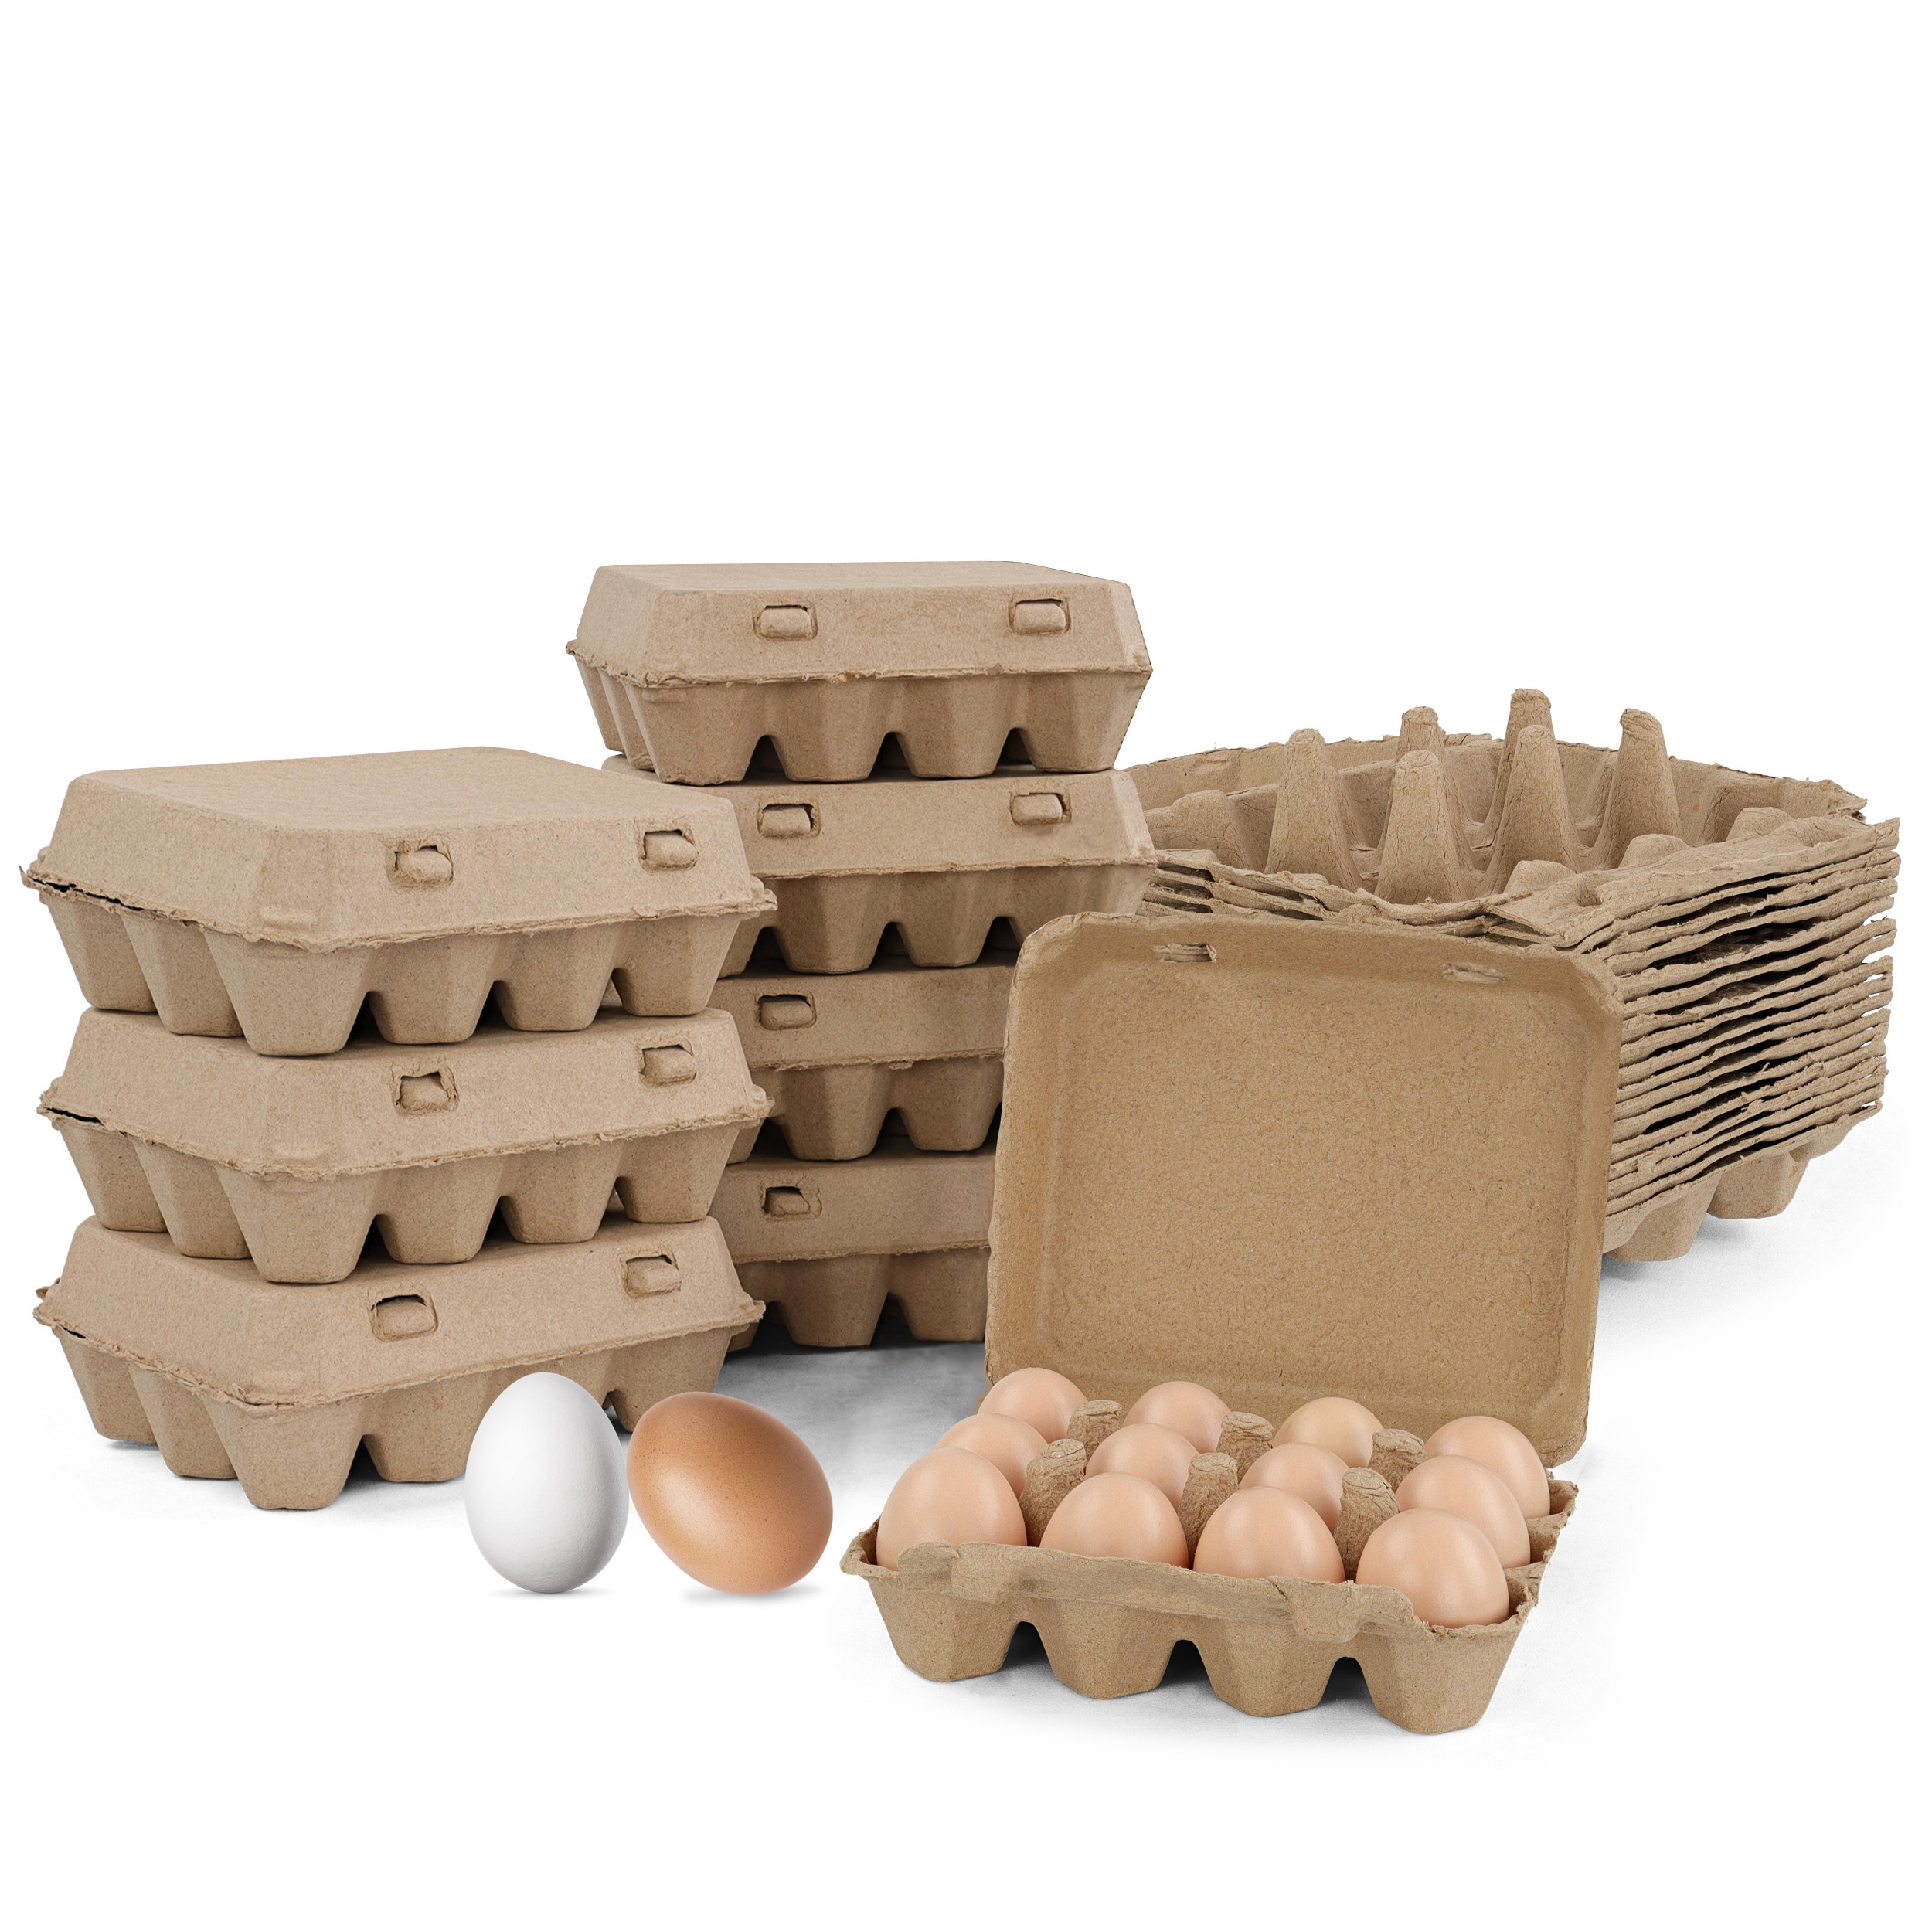 Ruralty Recycled Cardboard Egg Cartons 25ct Dozen 4x3 Vintage Bulk Egg Cartons - image 1 of 7